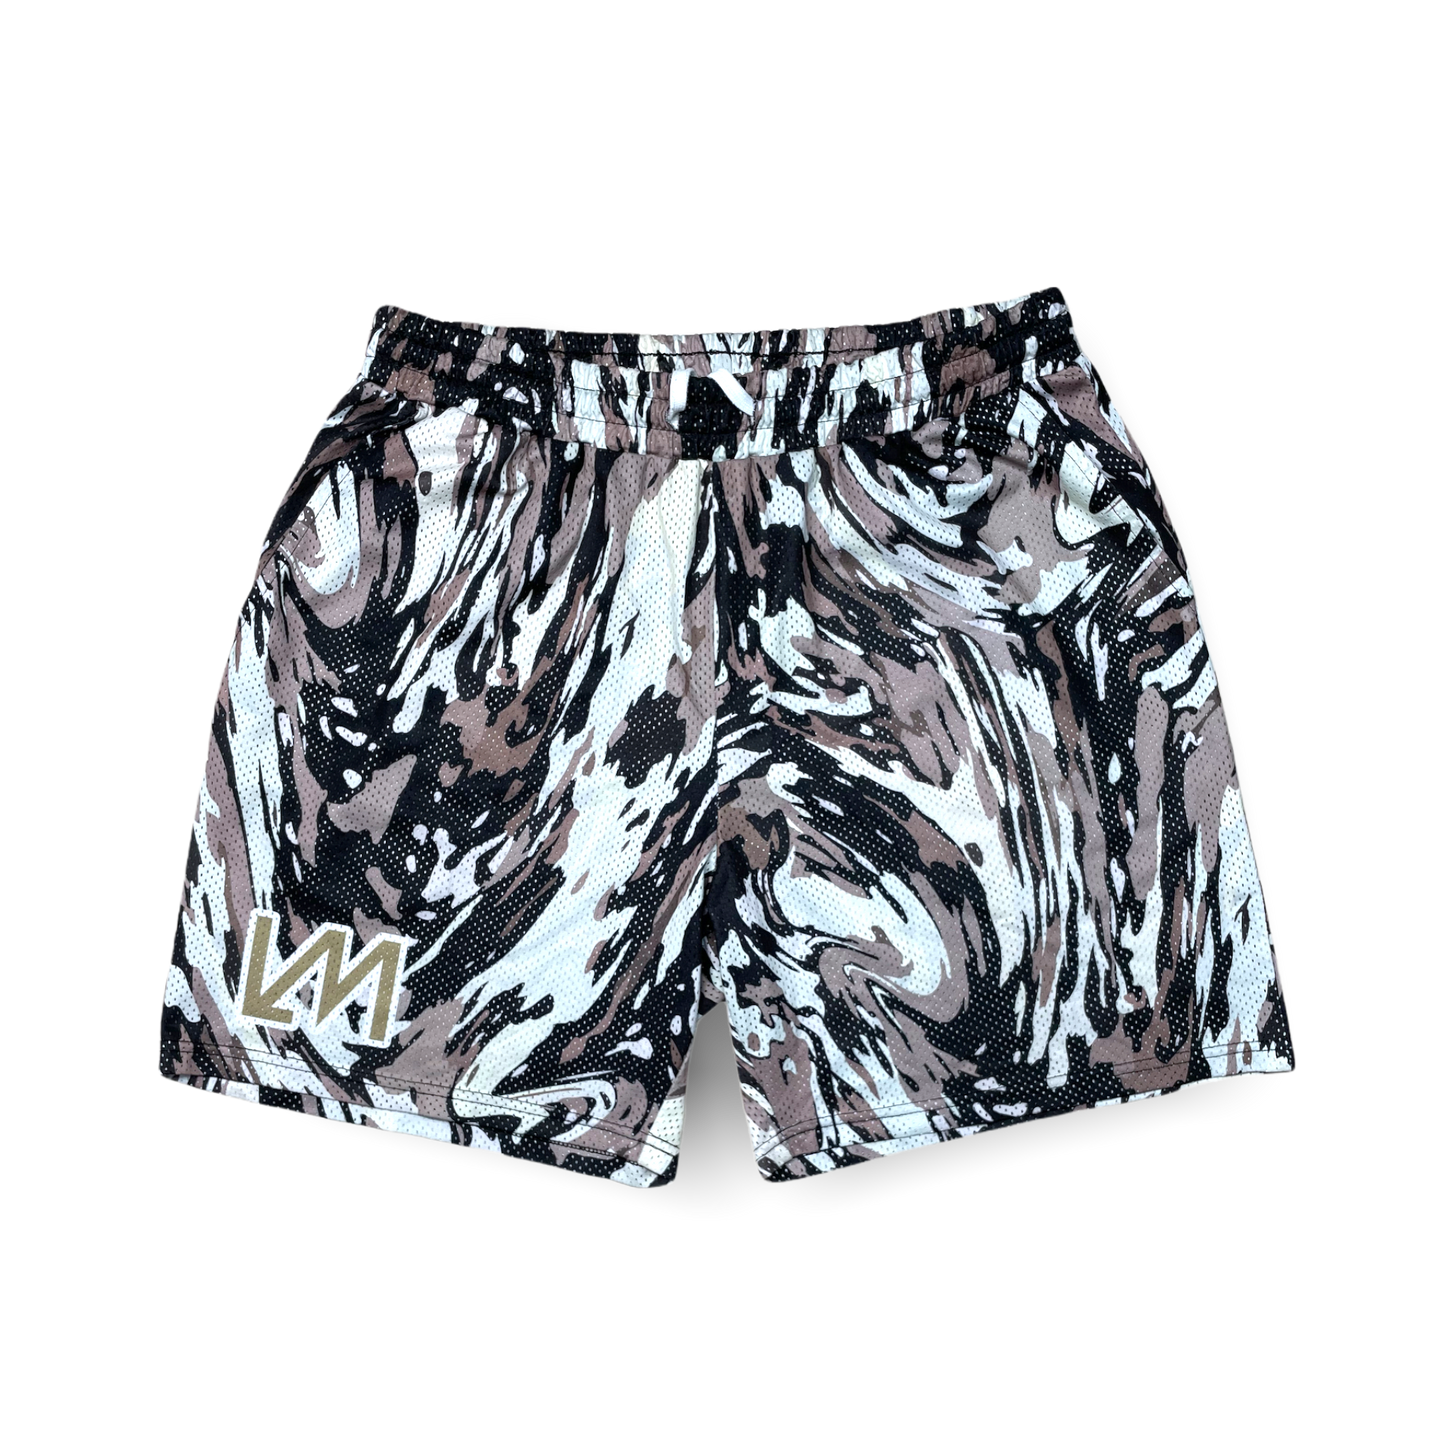 Marble Wave shorts - LVMLOSANGELES